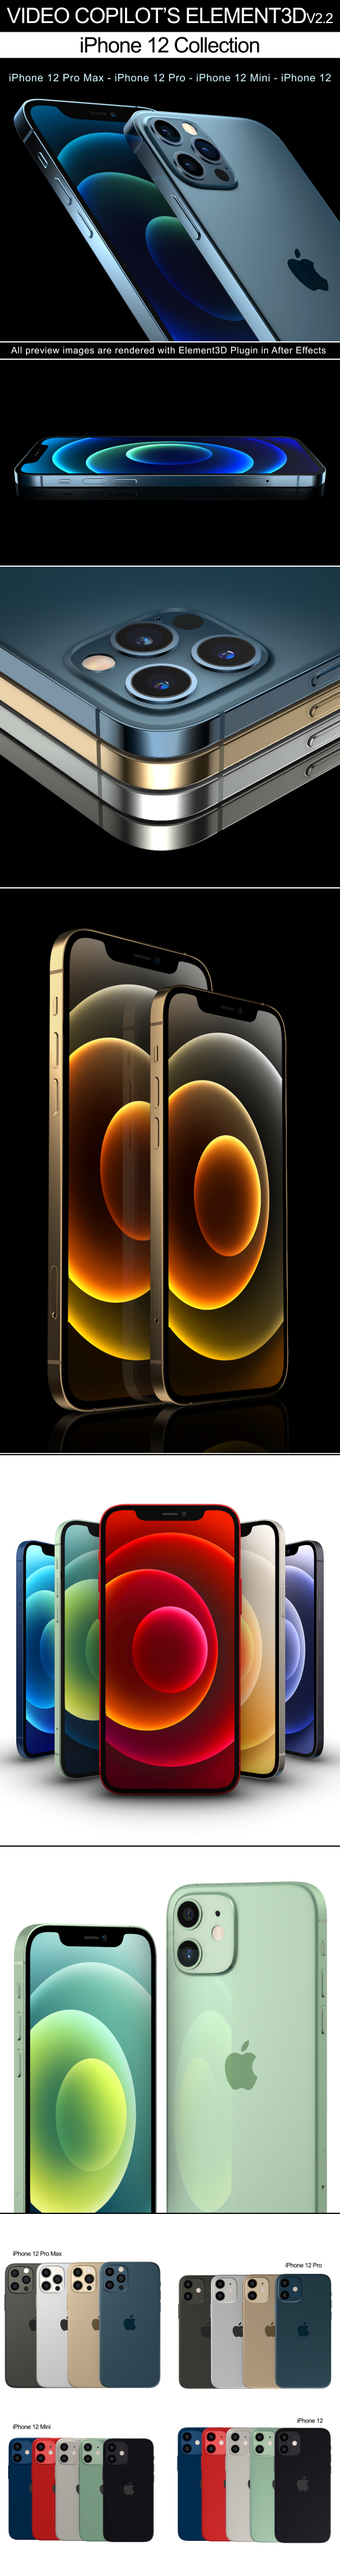 Element3D - iPhone - 3Docean 25400666